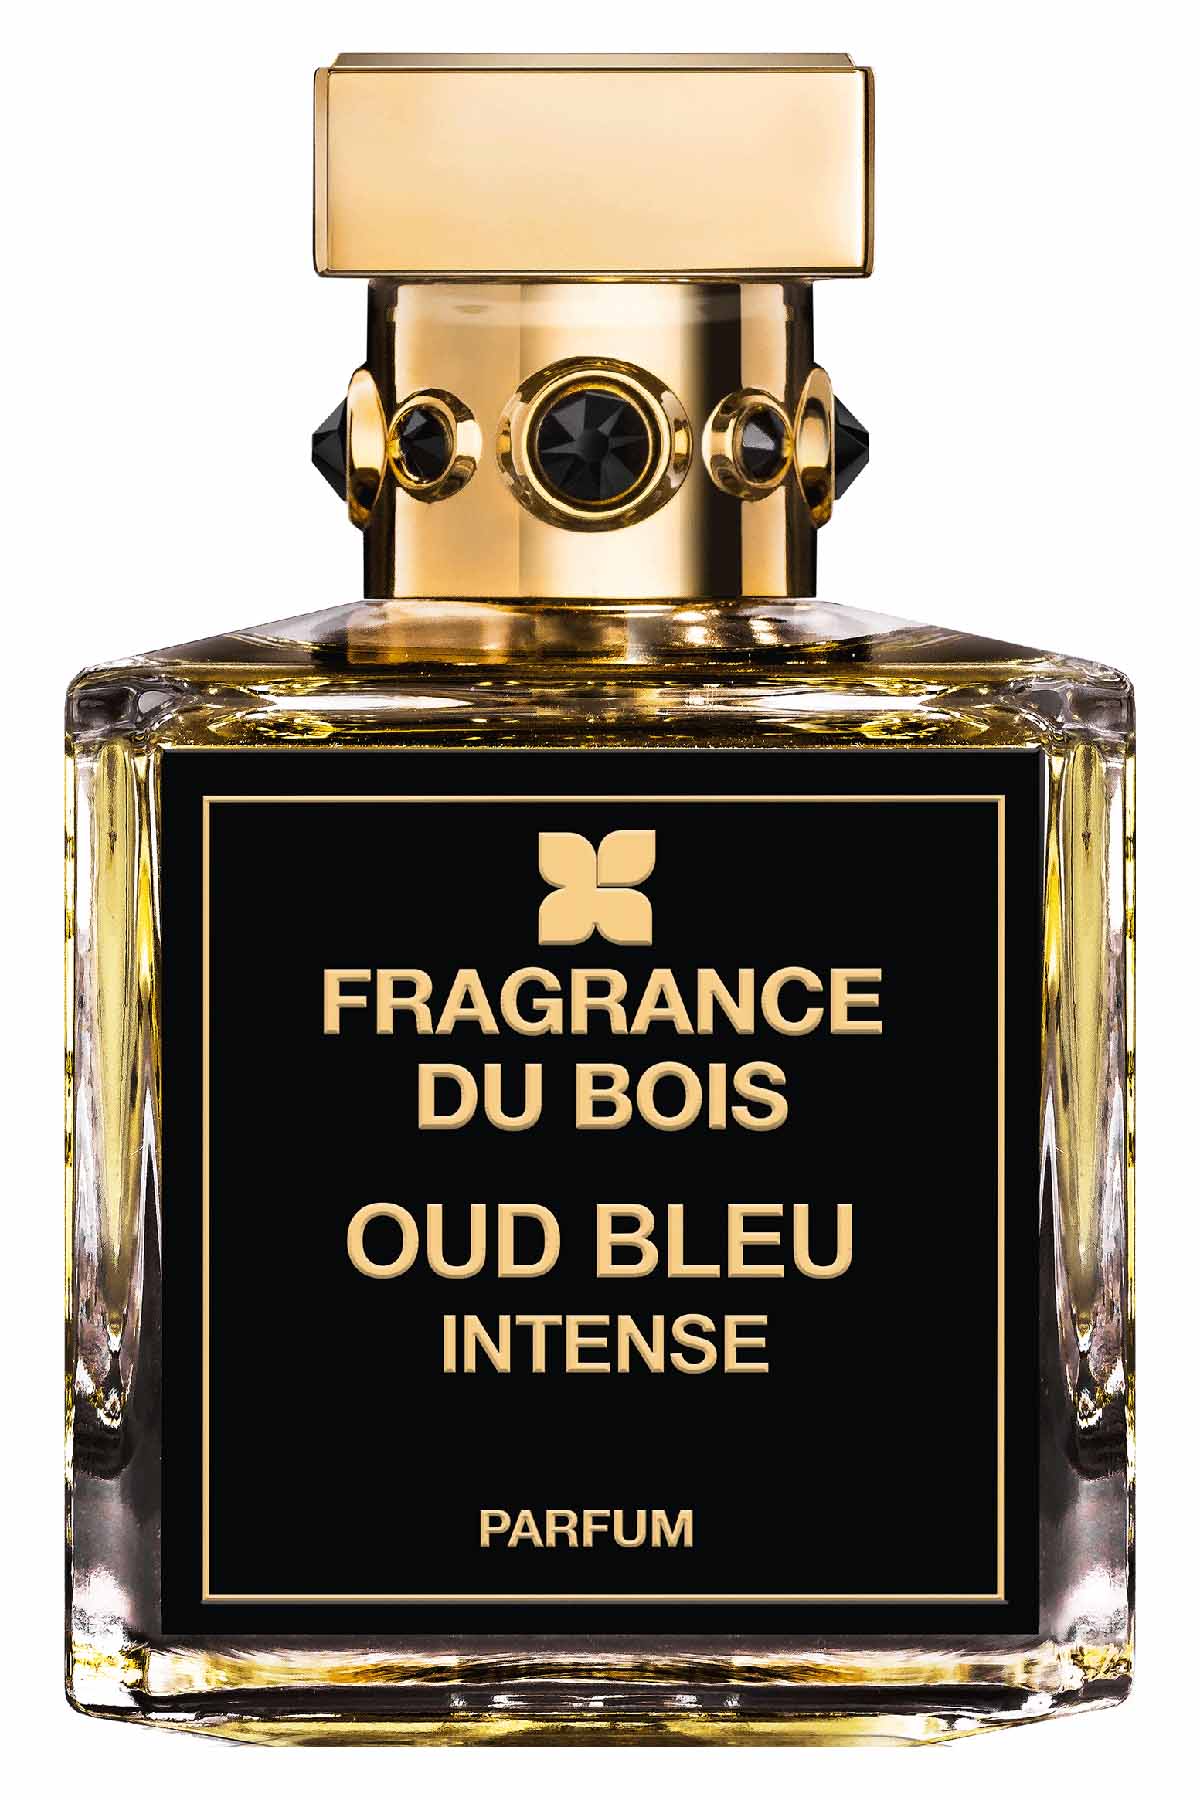 Fragrance du Bois Oud Bleu Intense 1.7 oz